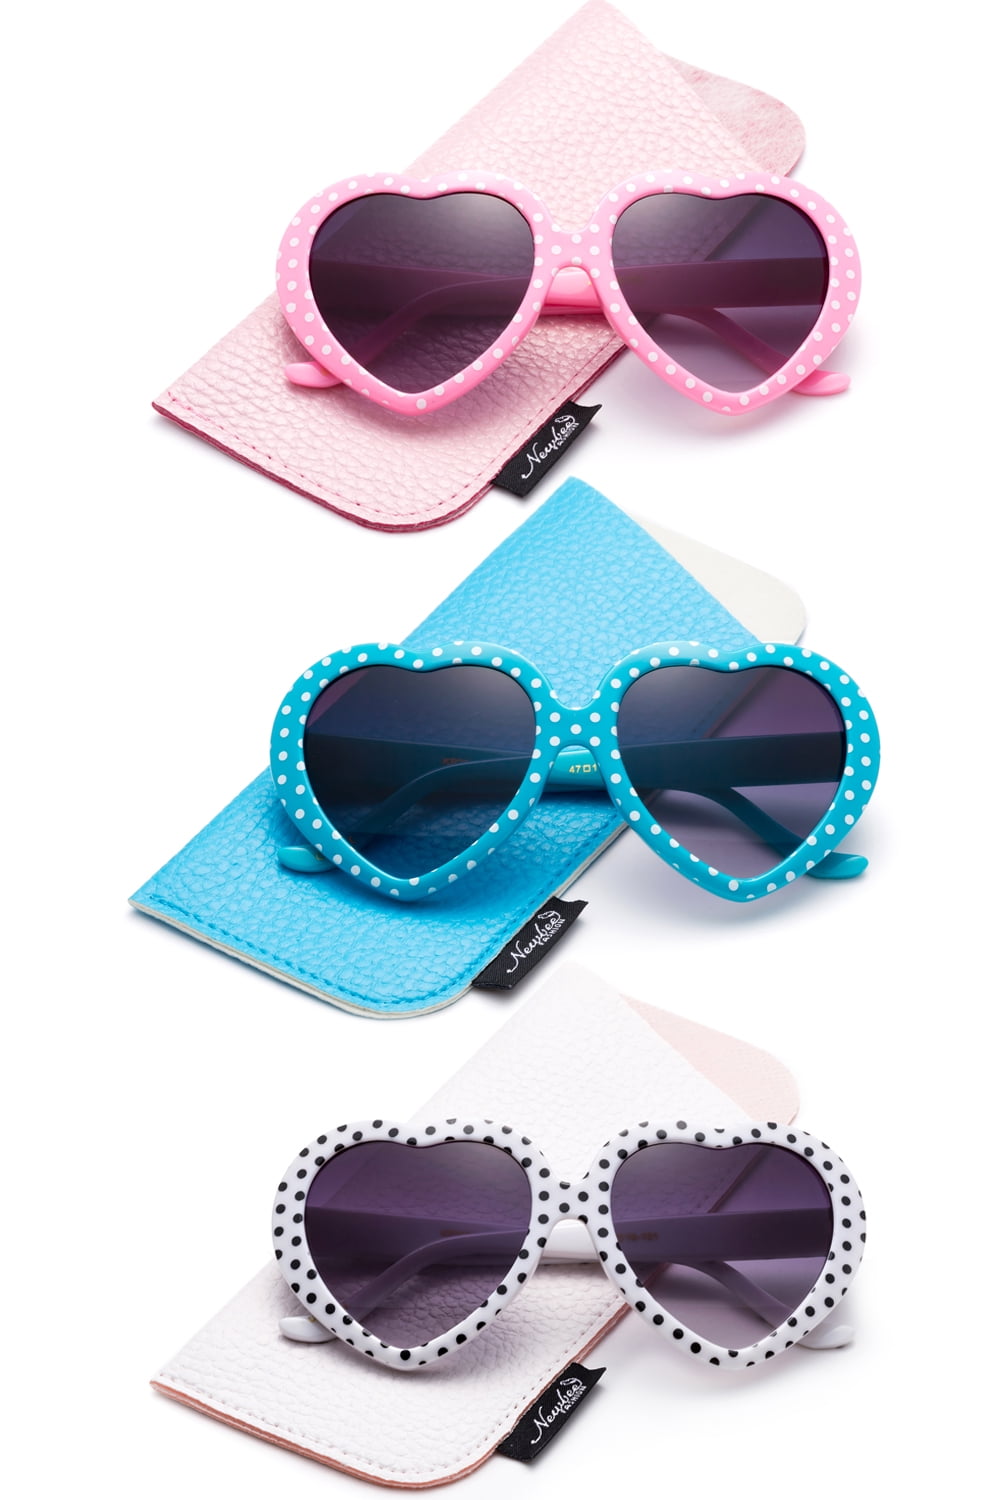 LOPHORINA Cute Kids Heart Shaped Sunglasses for Toddler Girls UV400 